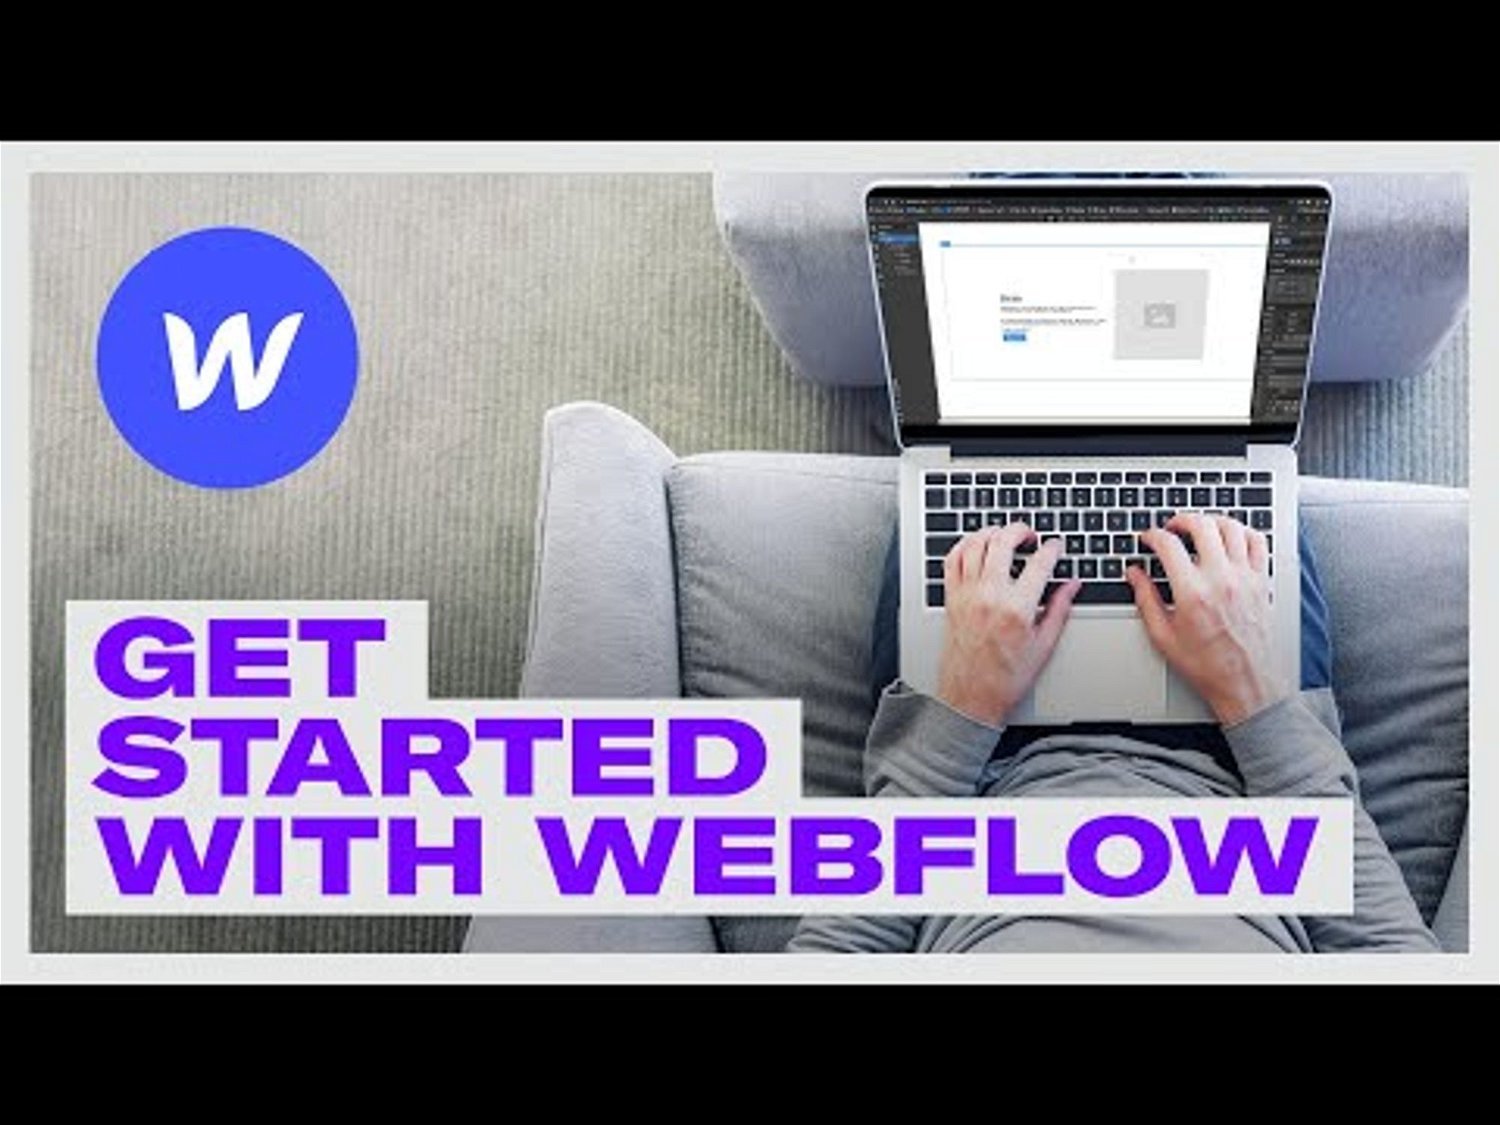 WEBFLOW FOR BEGINNERS 2020: The best web design software